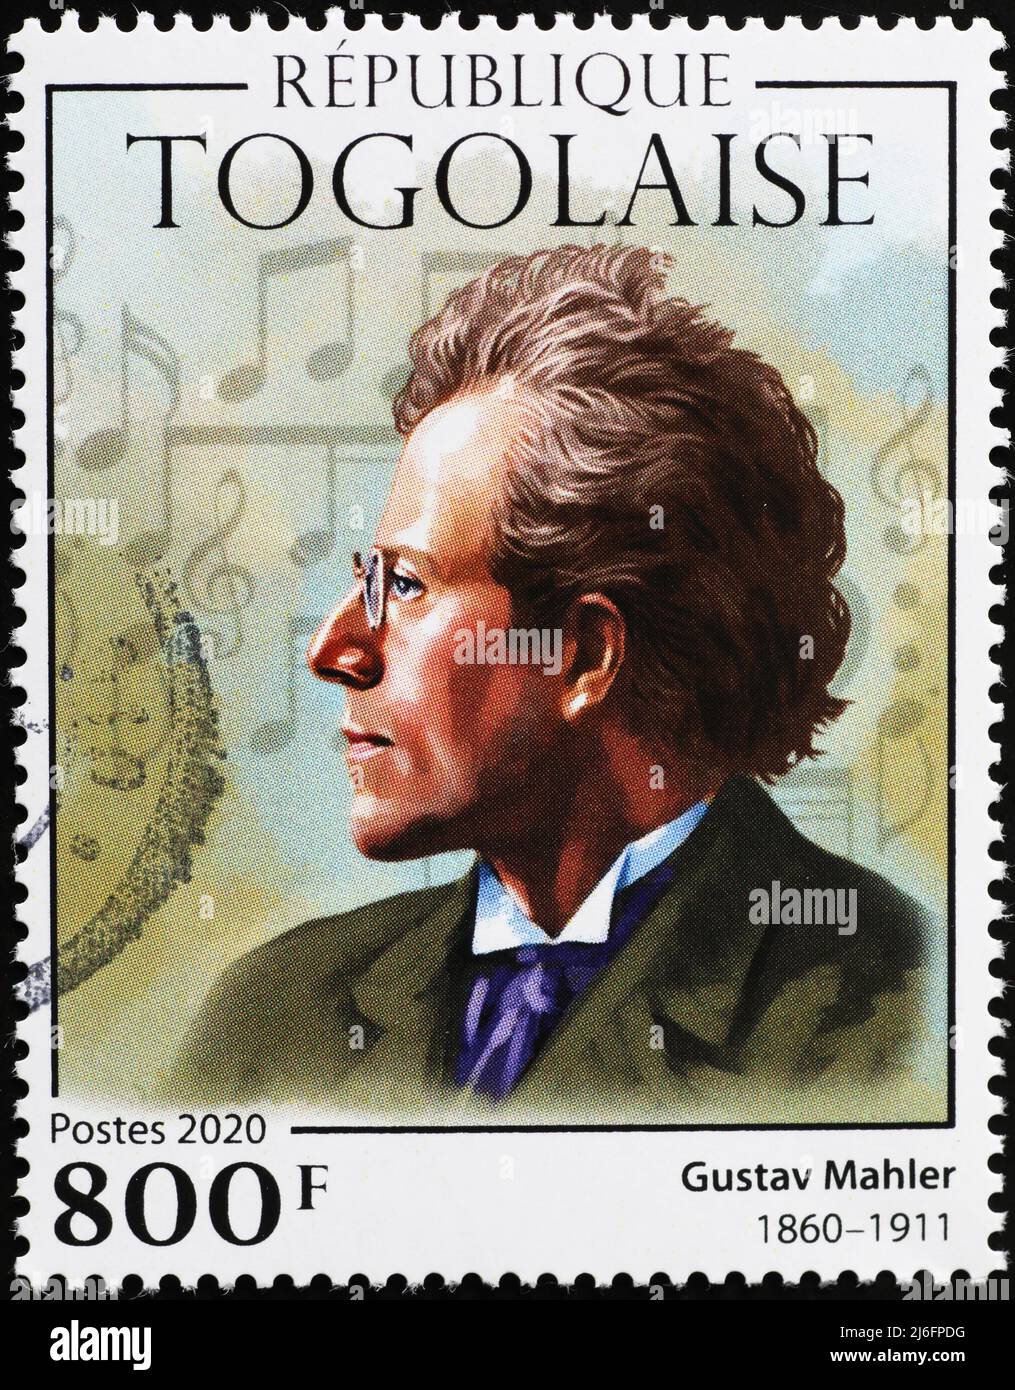 Portrait of Gustav Mahler on postage stamp from Togo Stock Photo